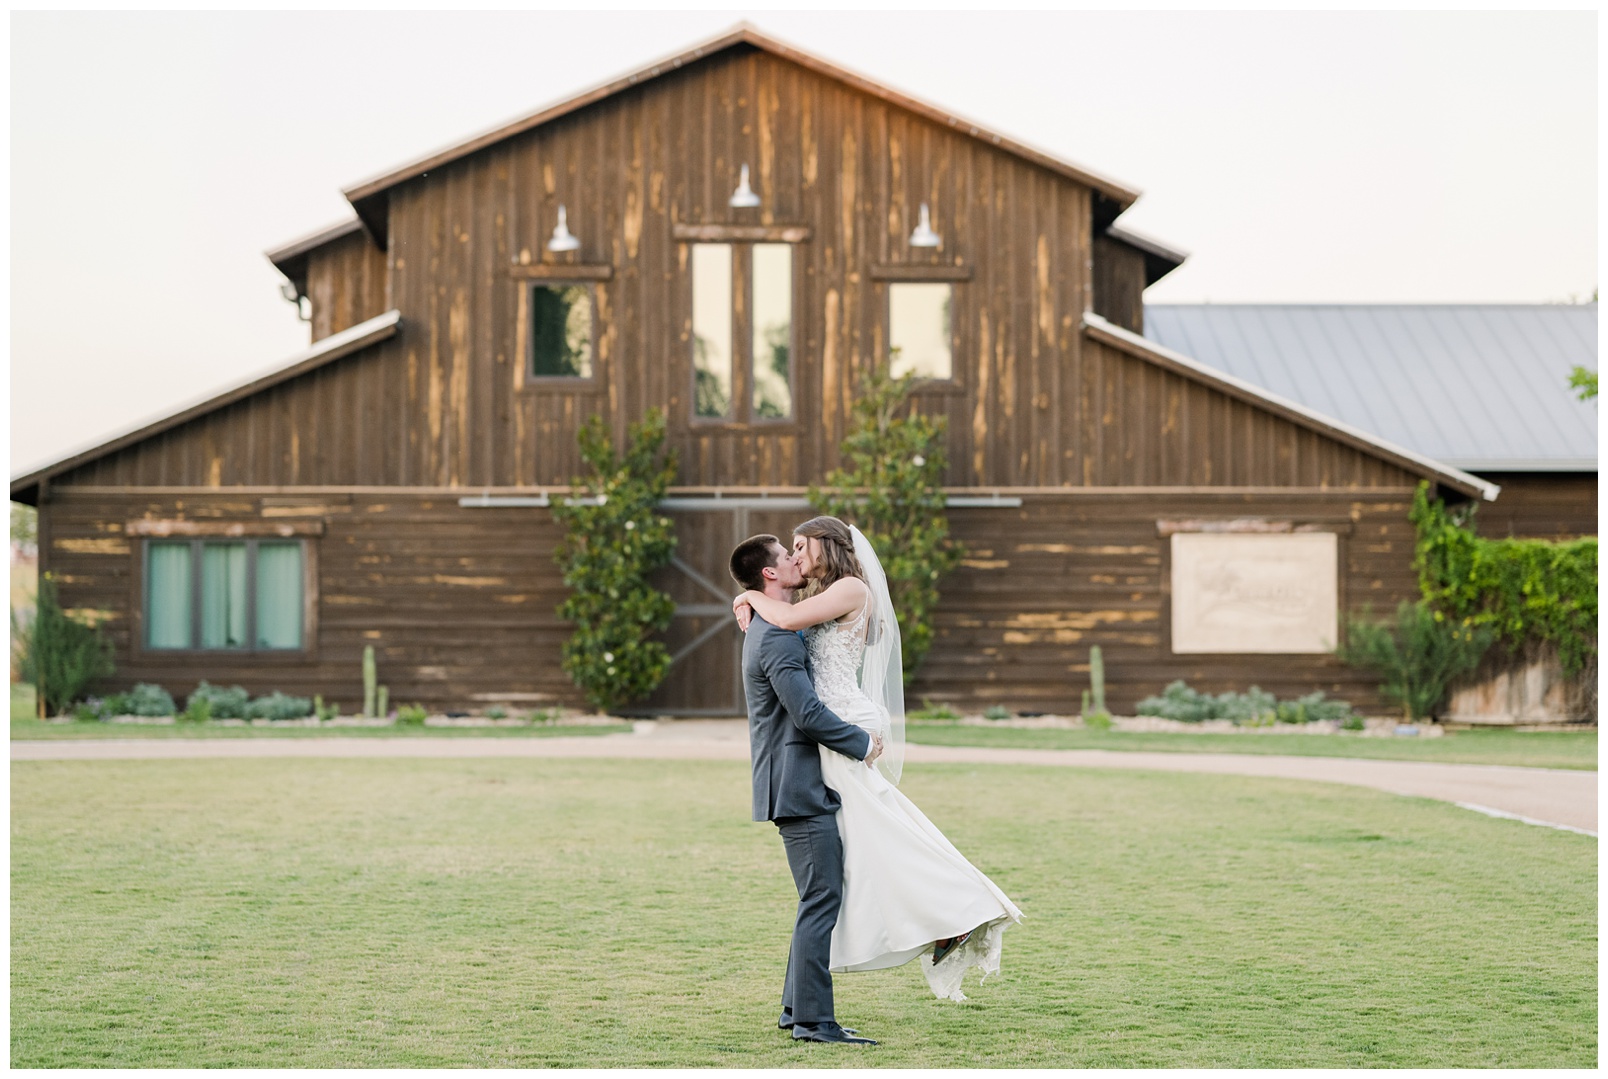 Lone Oak barn wedding venue in round rock texas